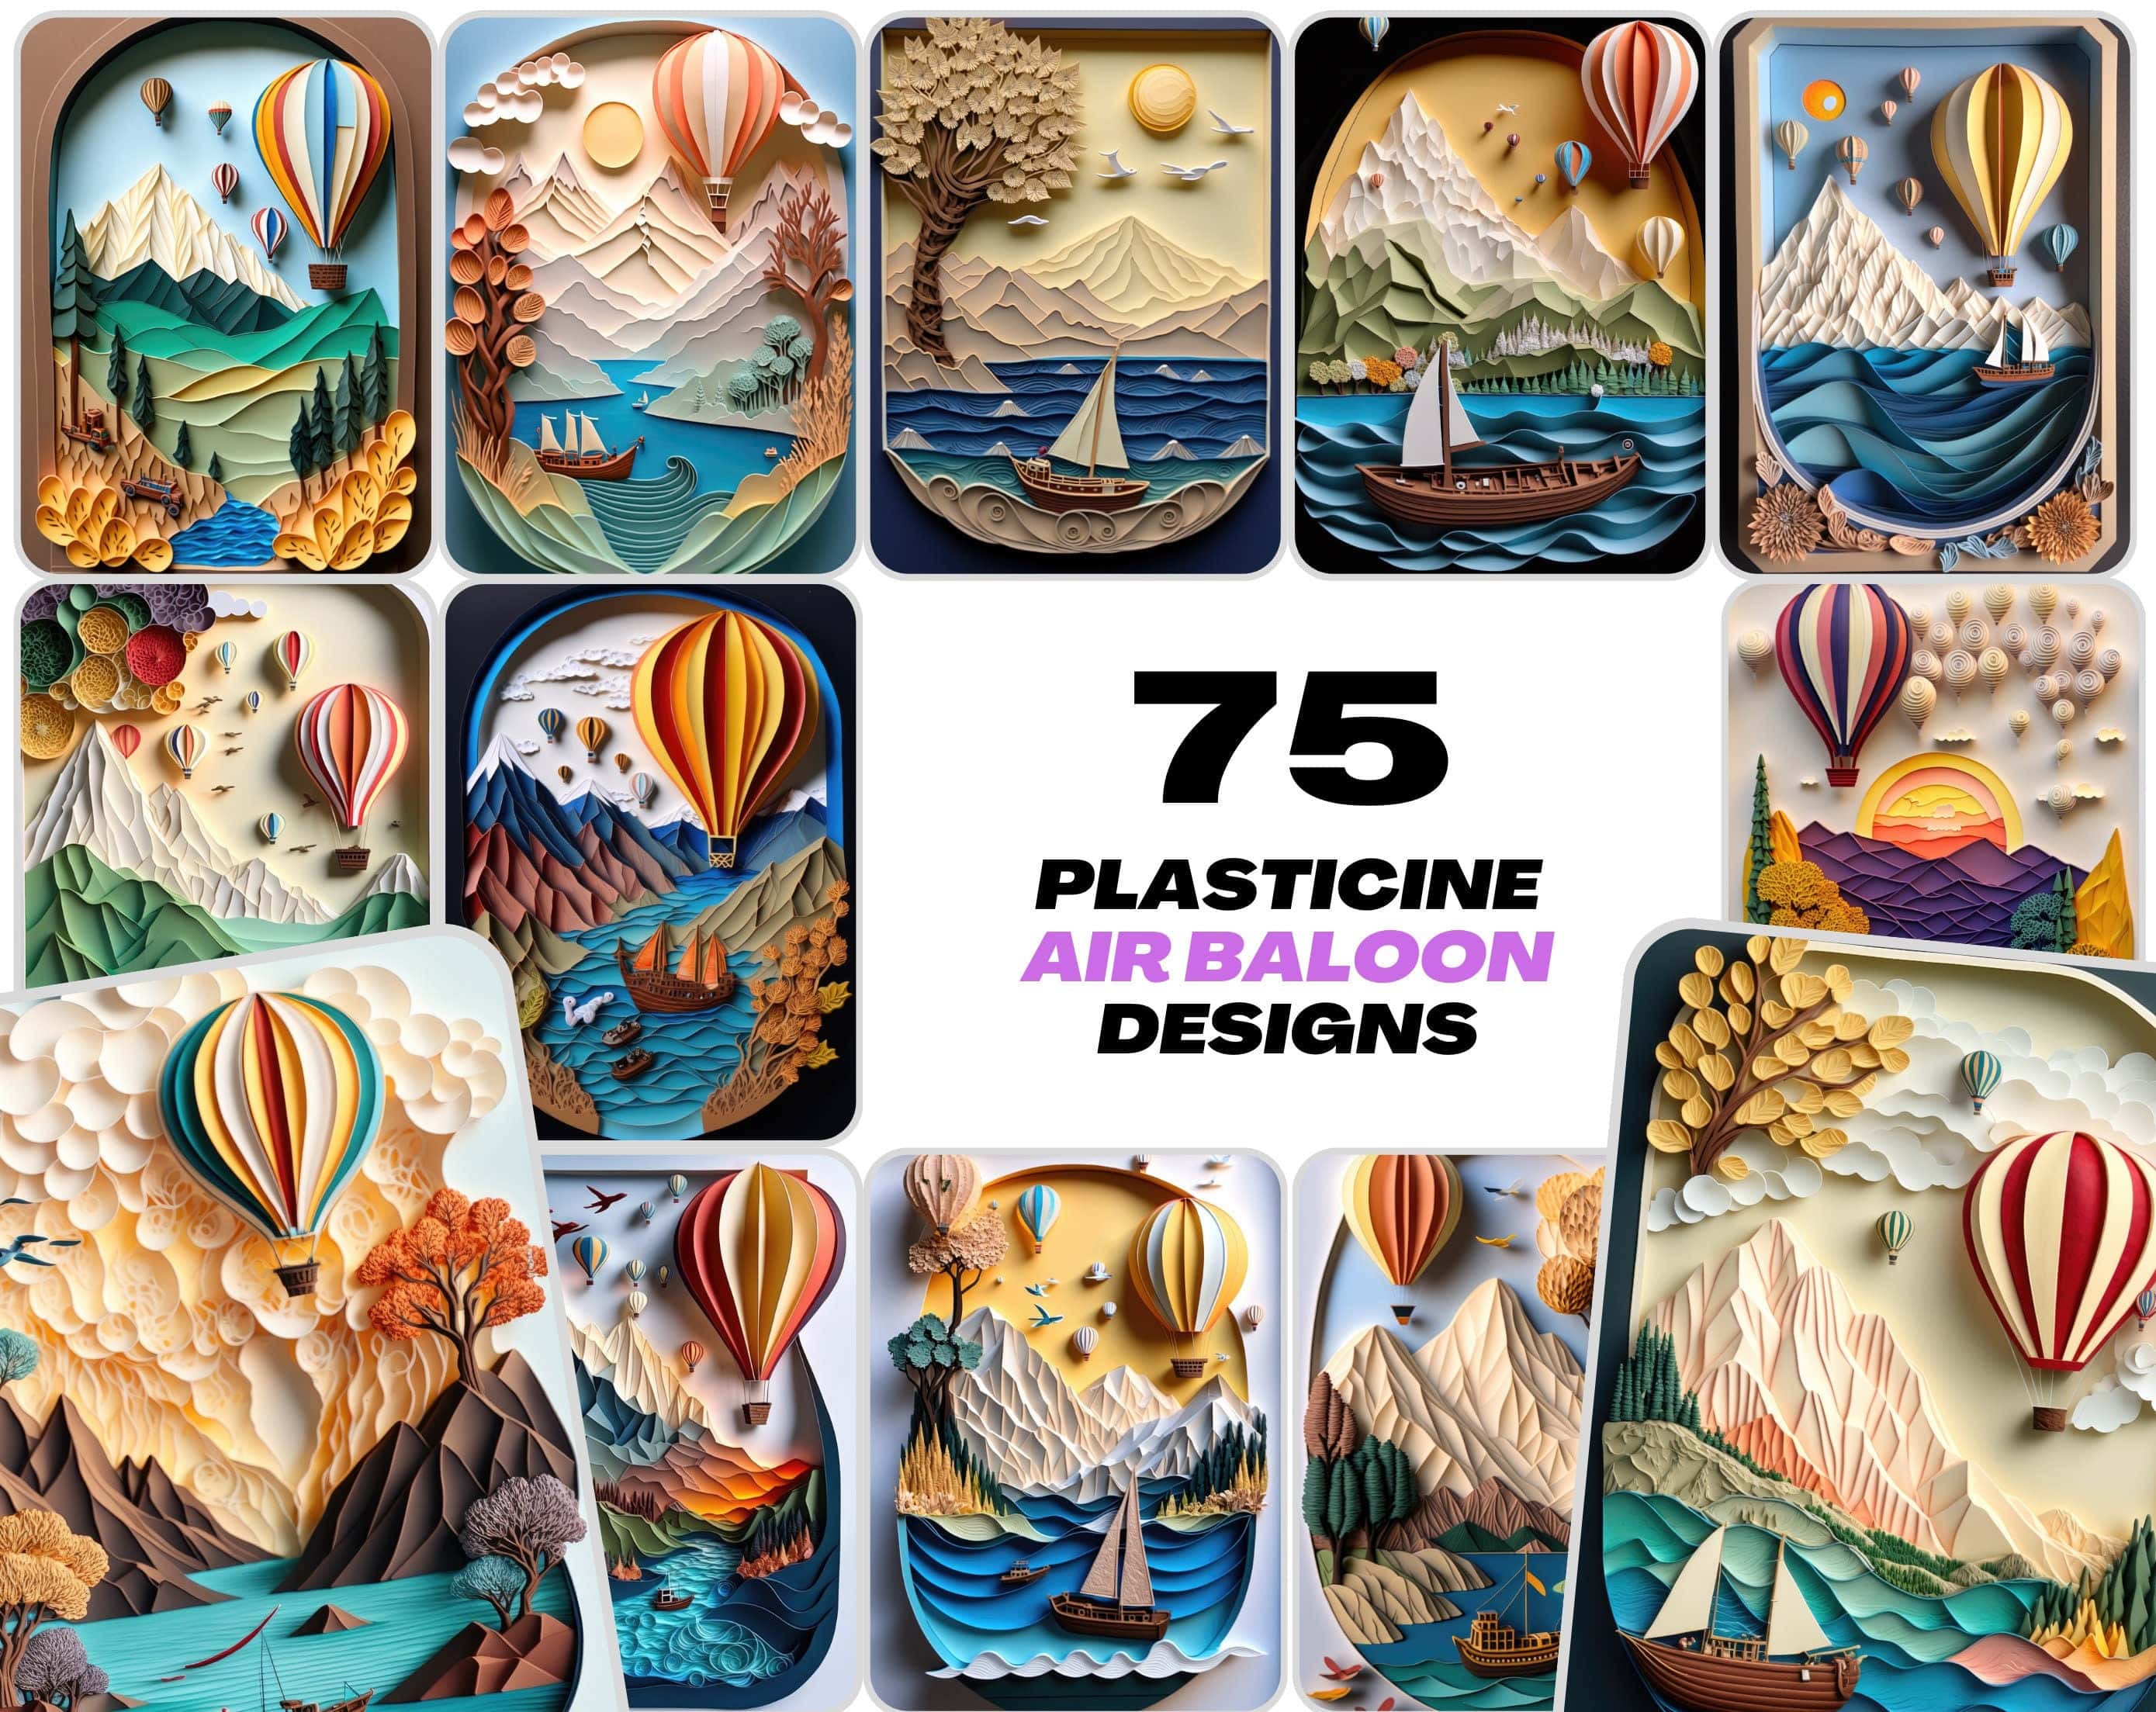 Whimsical Plasticine Air Balloon Images Bundle - 75 Colorful Designs for DIY Projects, Digital Download, Iphone wallpaper or frames Digital Download Sumobundle